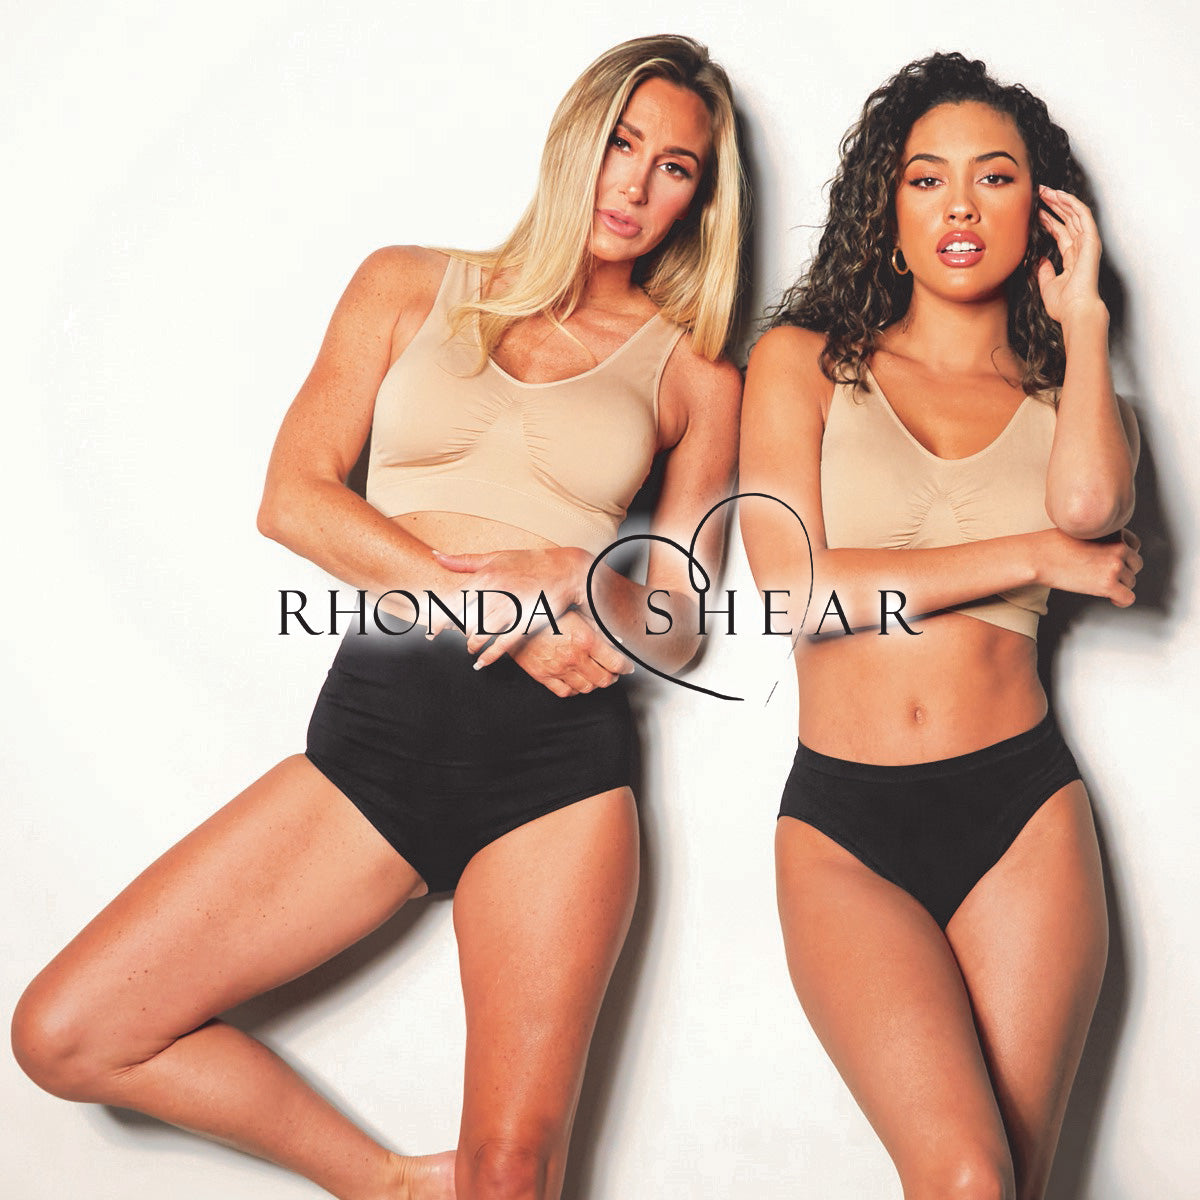 Pictures & Photos of Rhonda Shear  Rhonda shear, Shearing, Actresses